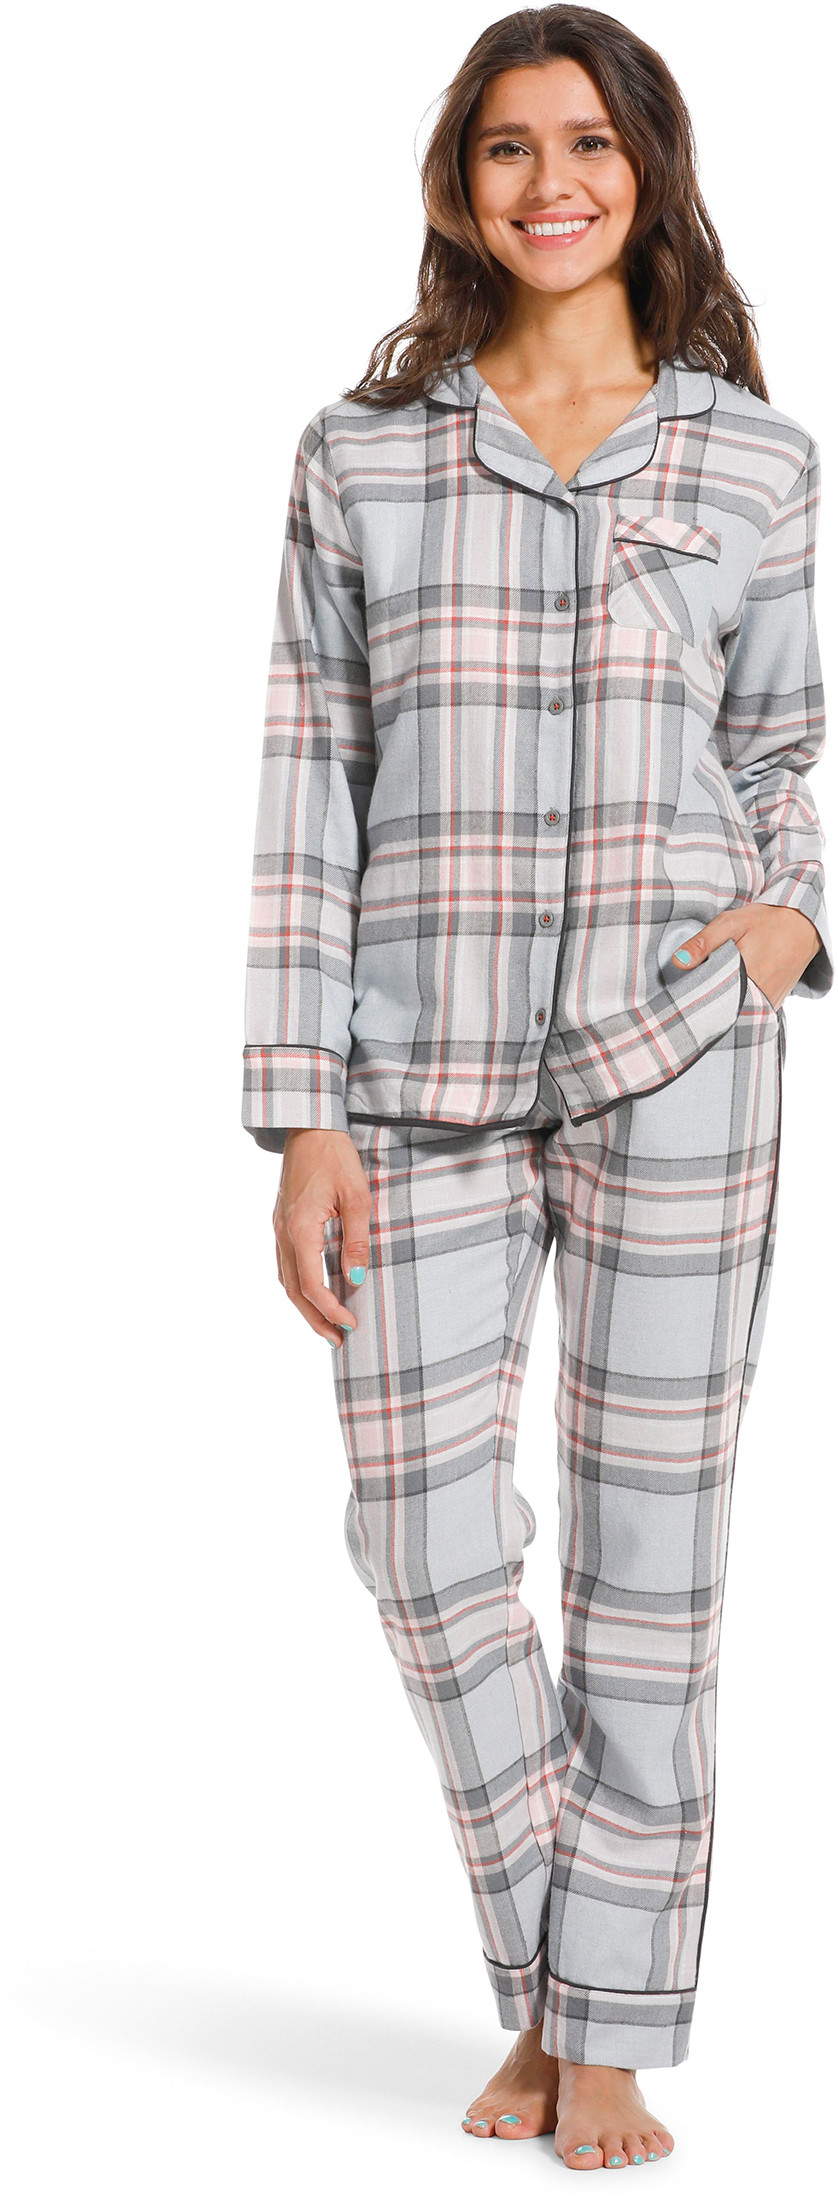 Rebelle dames pyjama flanel 21222-458-6-38